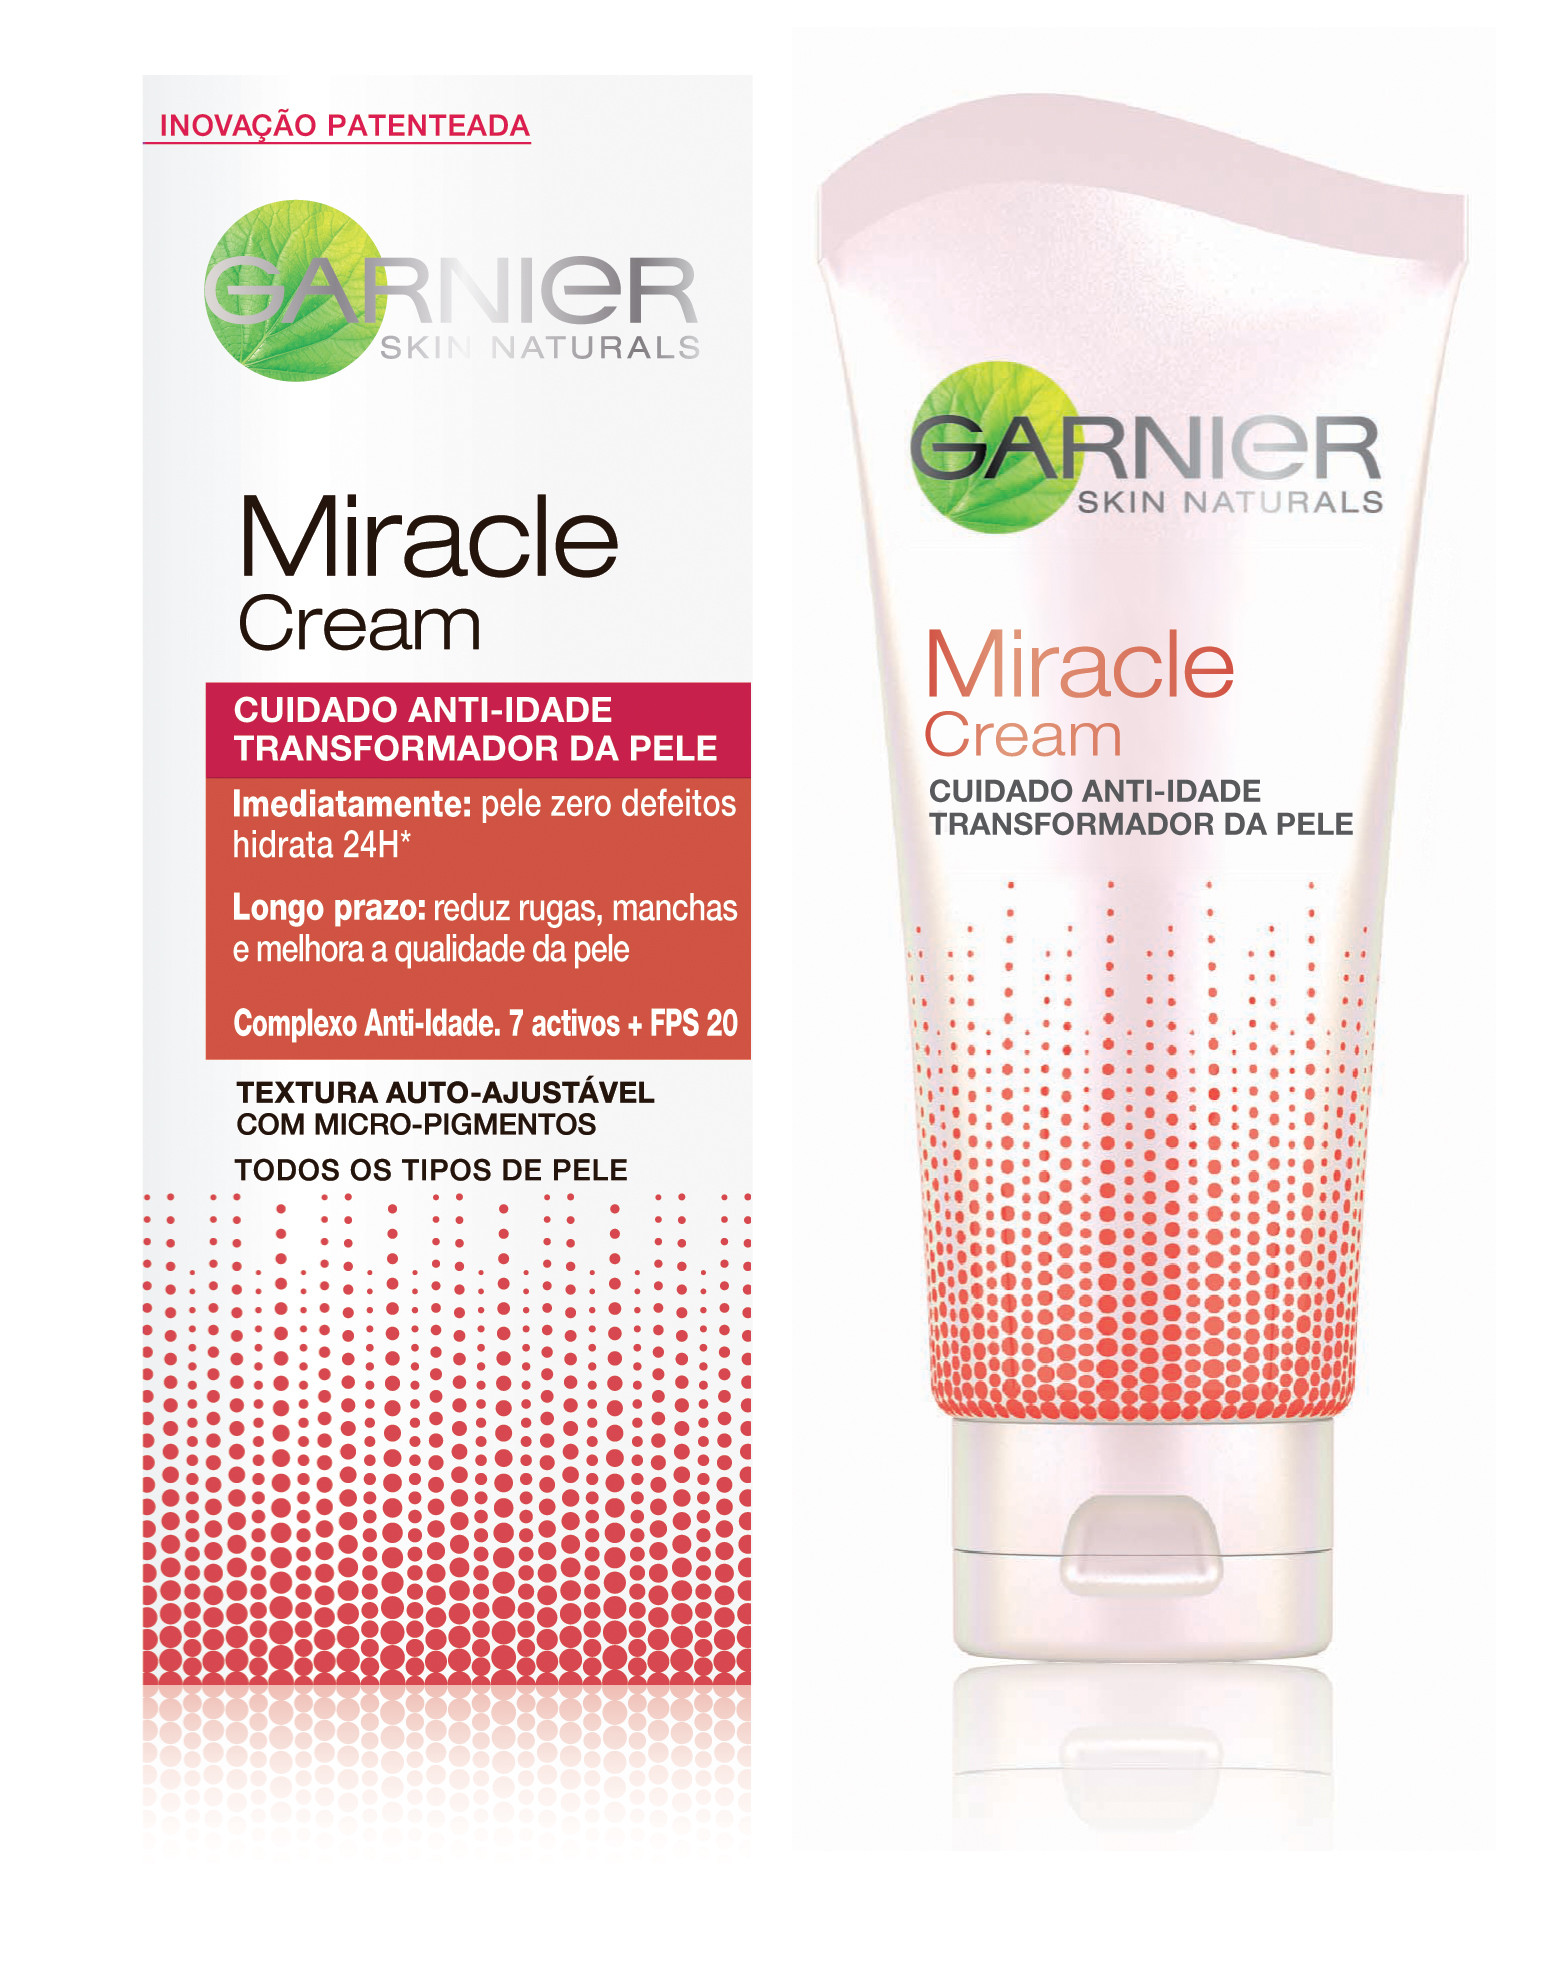 Garnier Miracle Cream.jpg